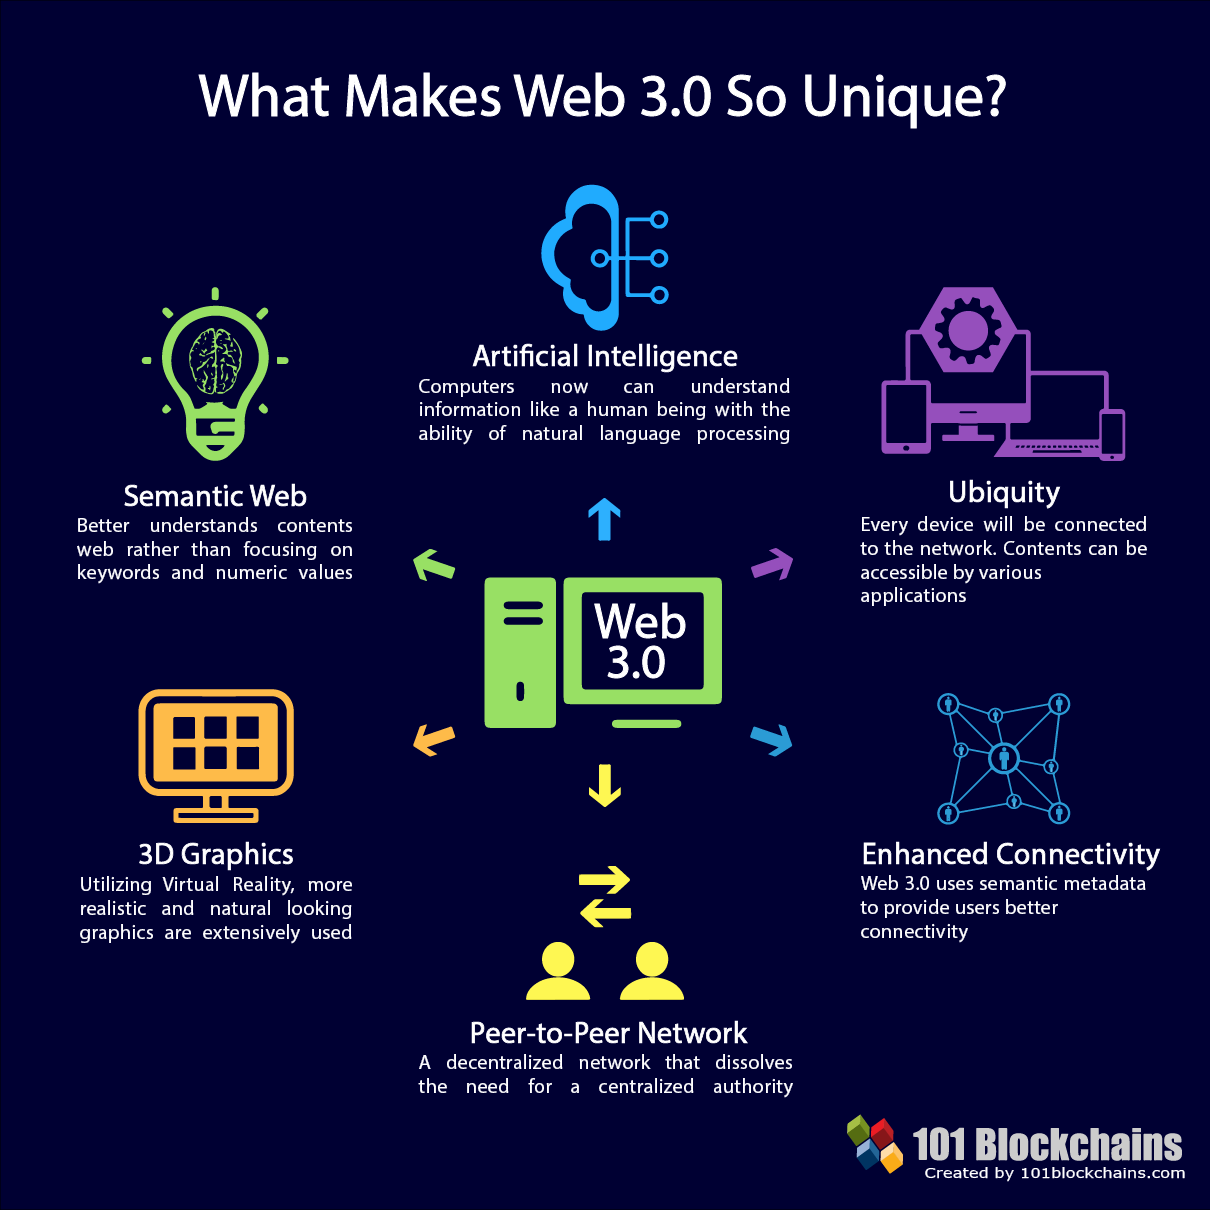 Web 3.0 distinct features